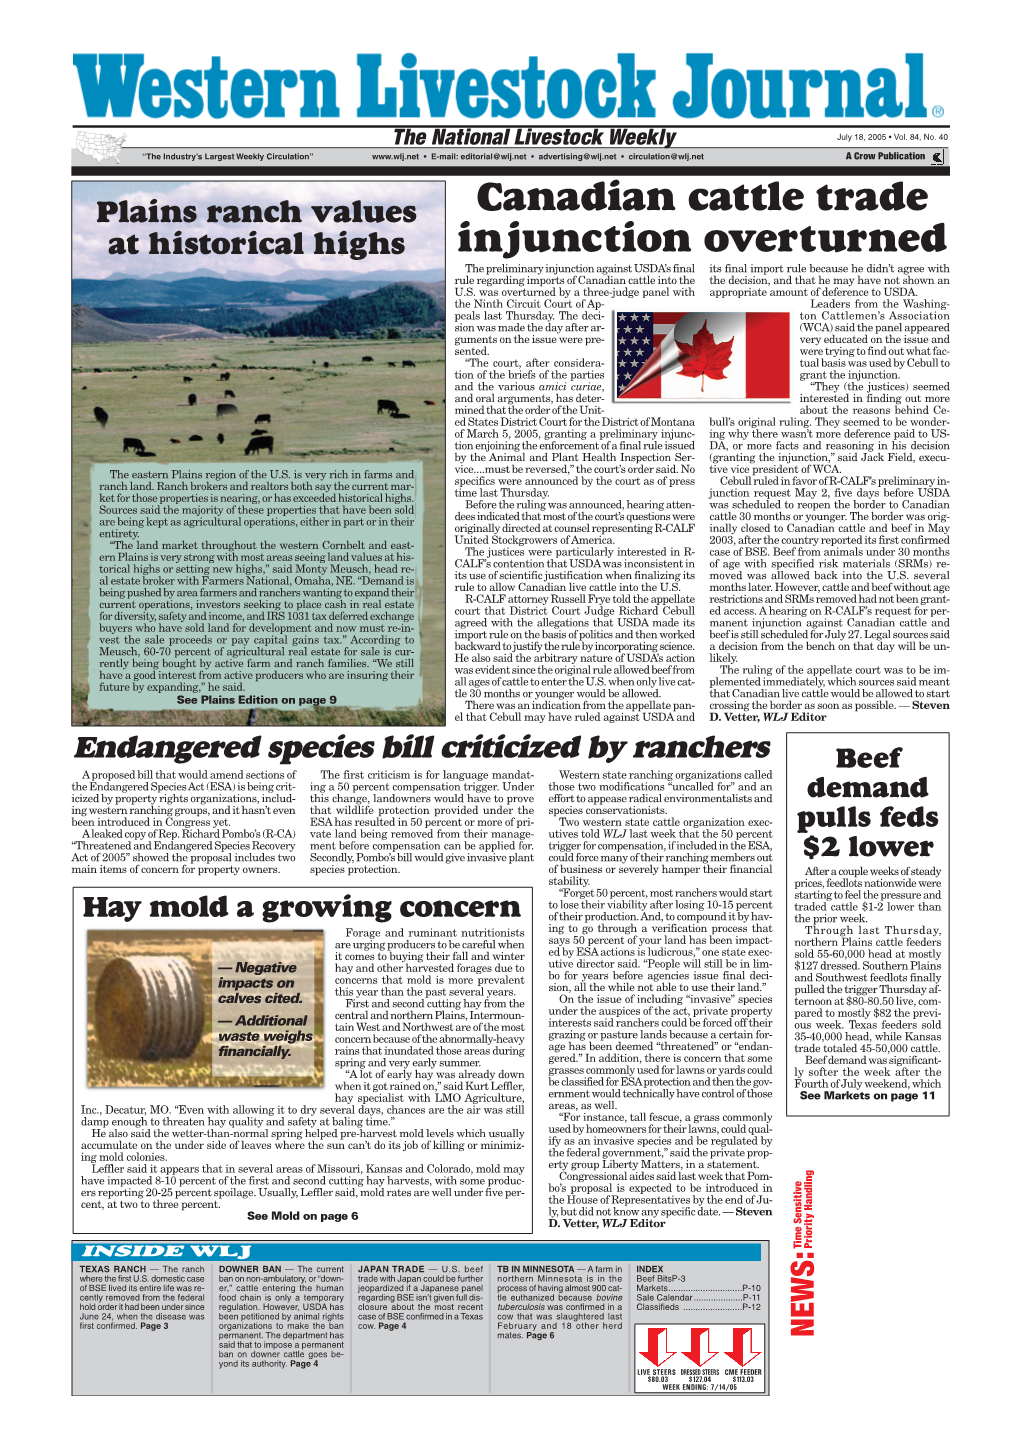 Canadian Cattle Trade Injunction Overturned